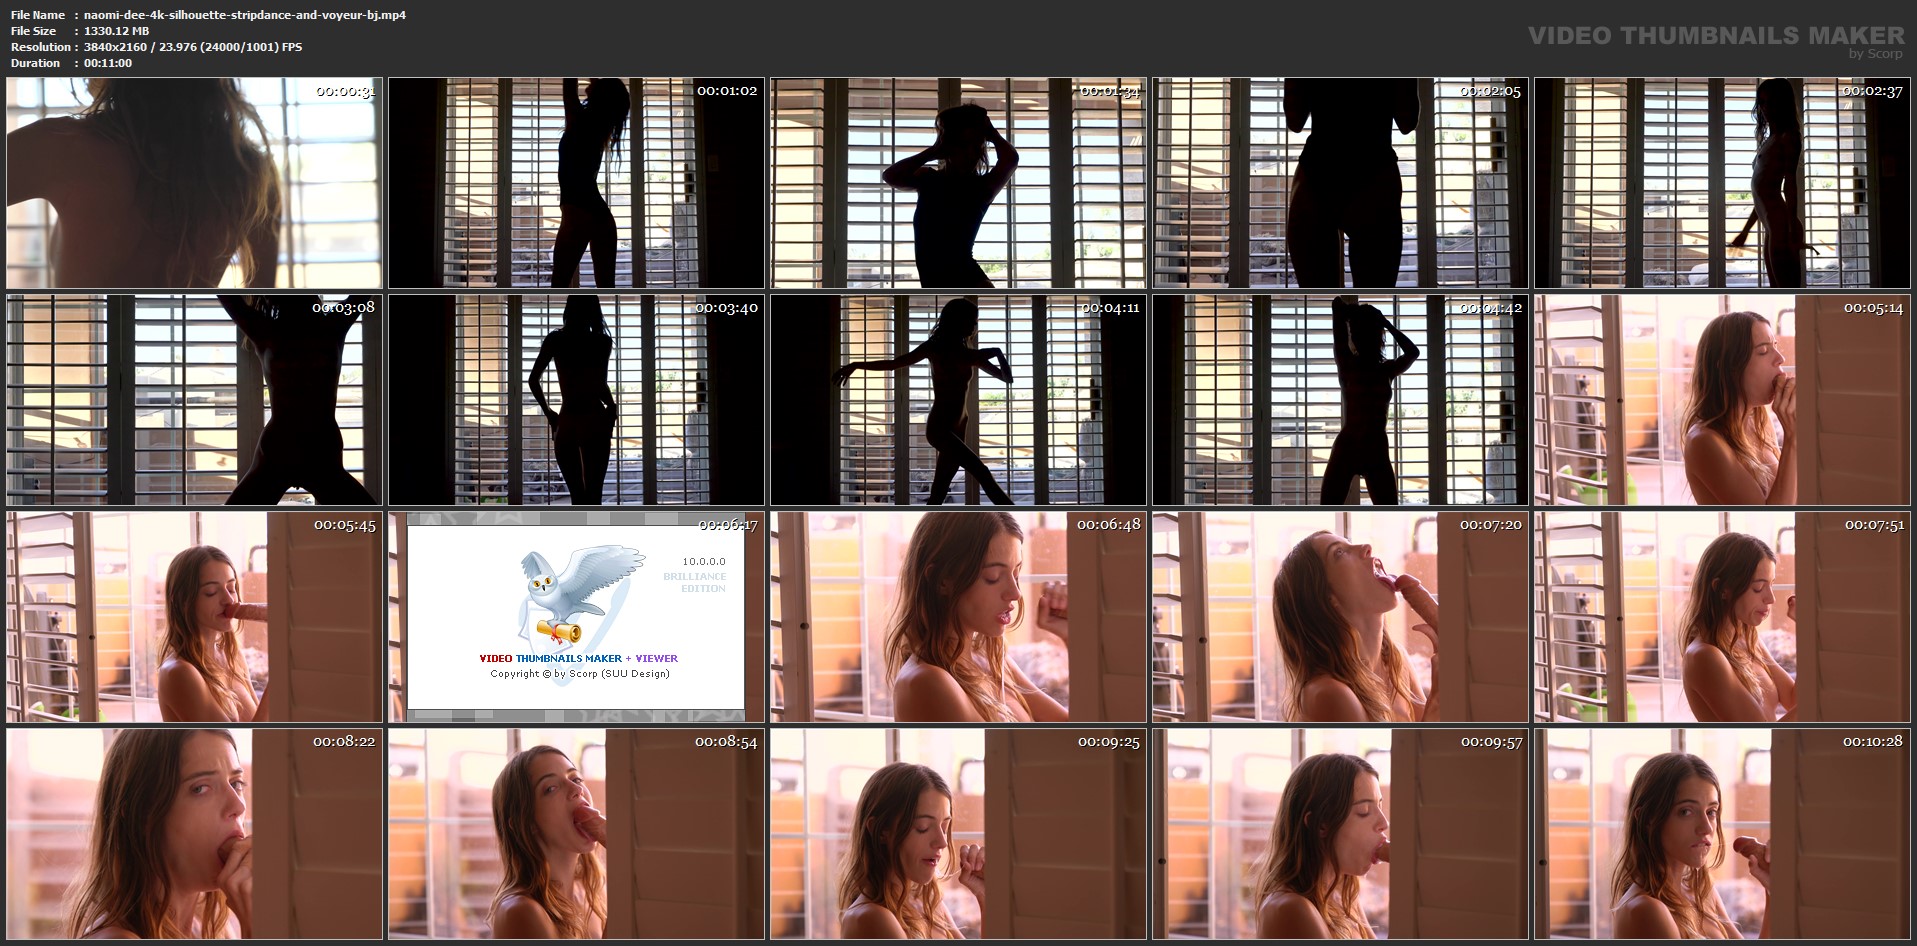 naomi-dee-4k-silhouette-stripdance-and-voyeur-bj.mp4.jpg